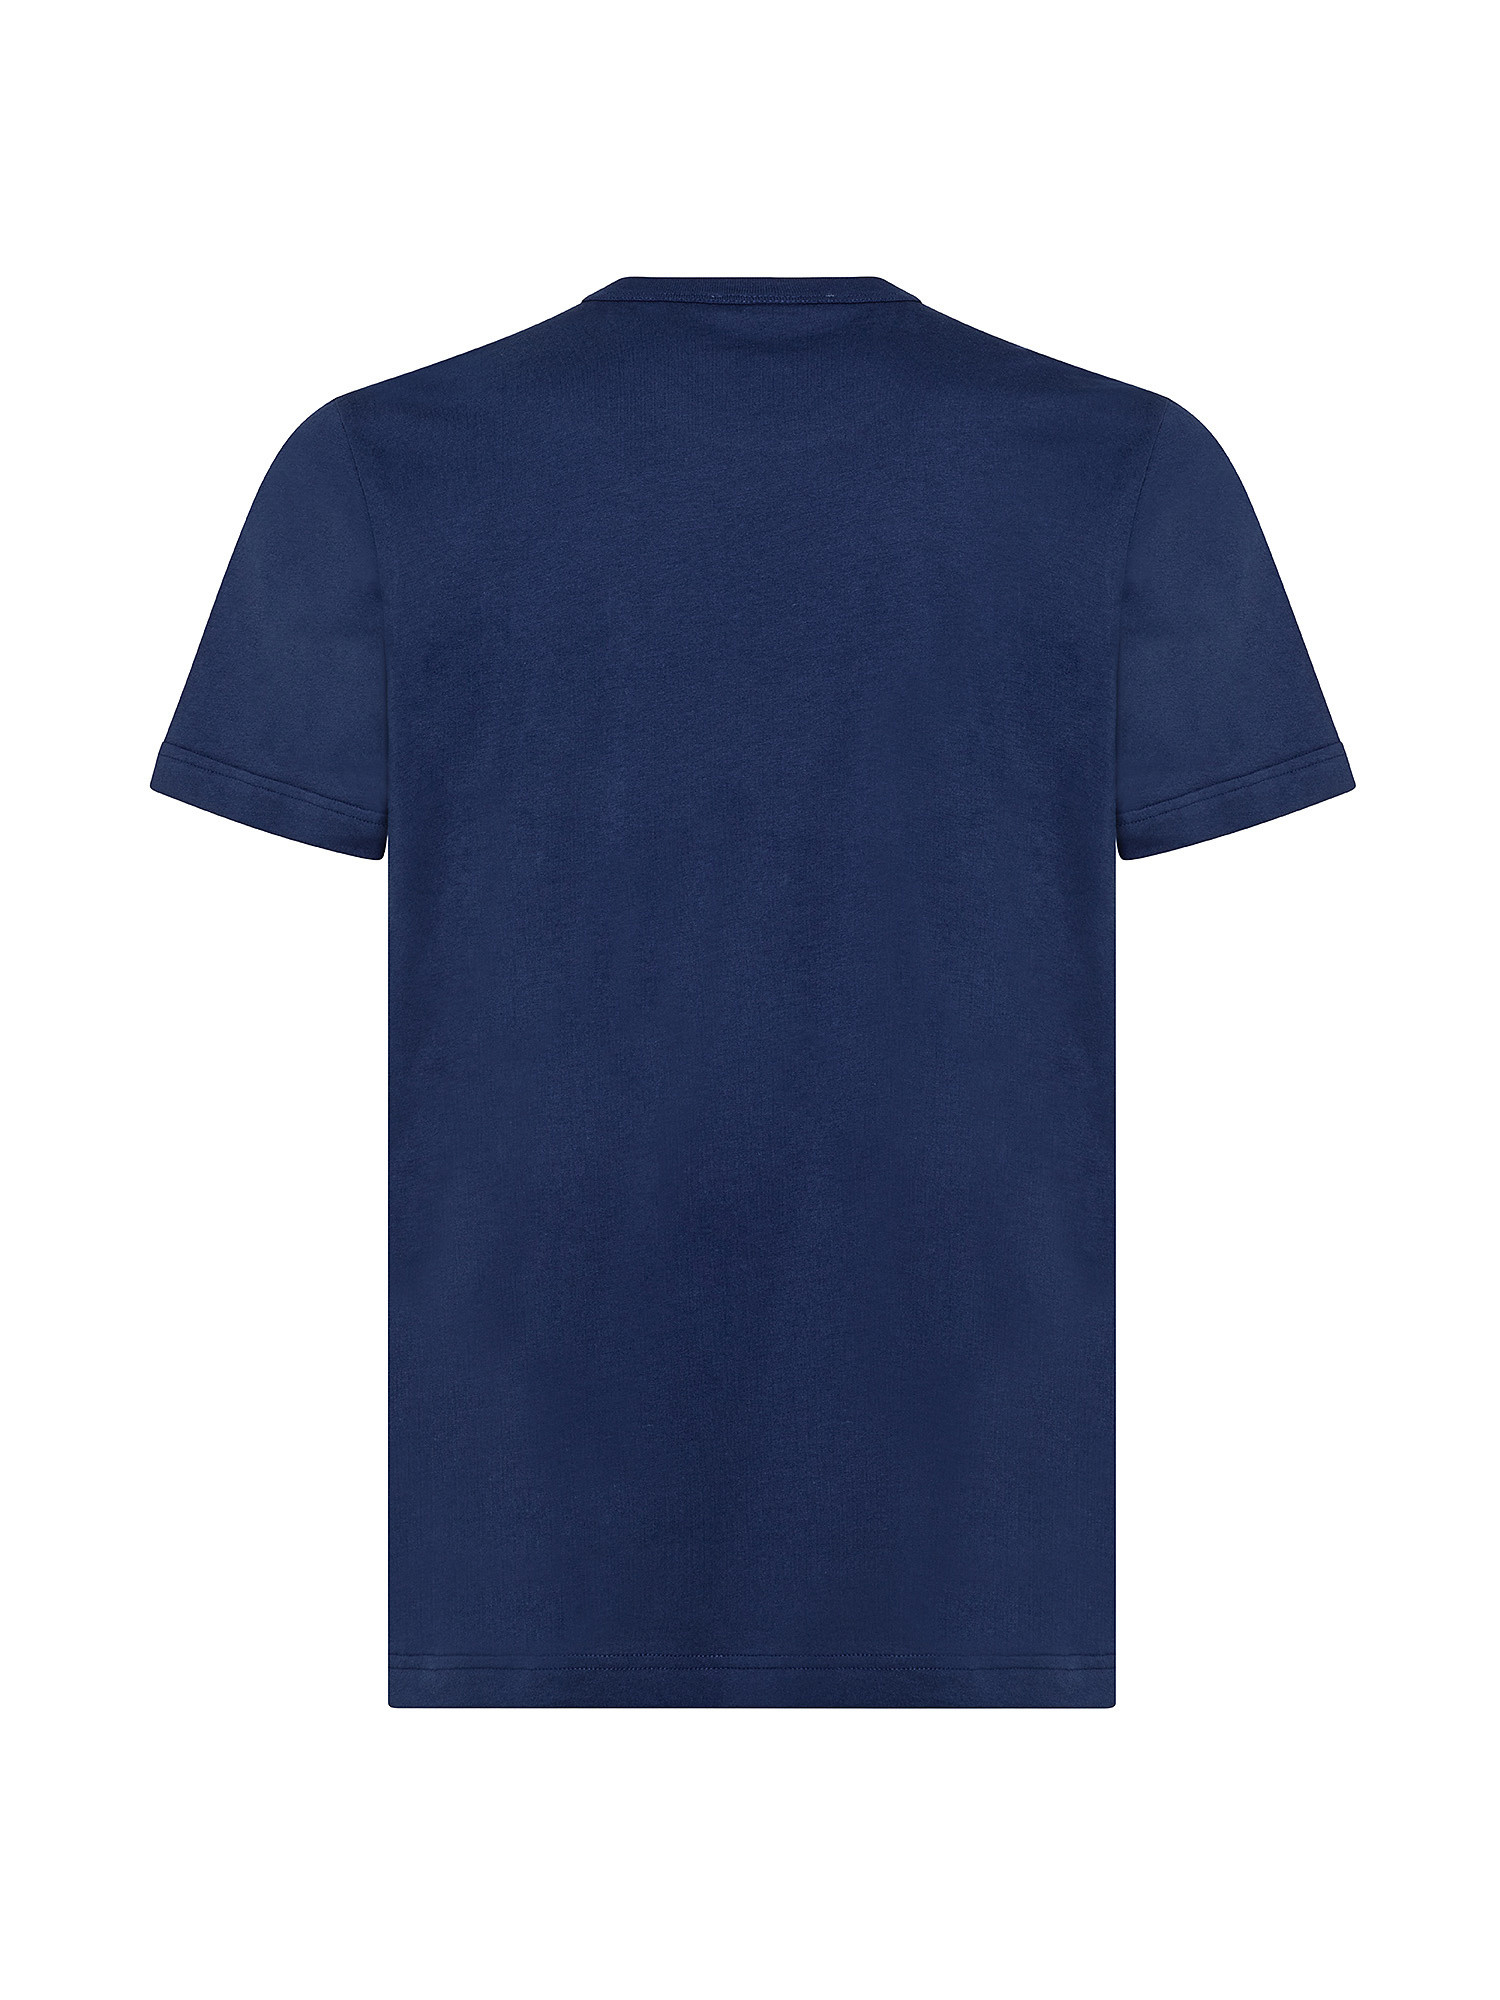 T-shirt manica corta, Blu, large image number 1